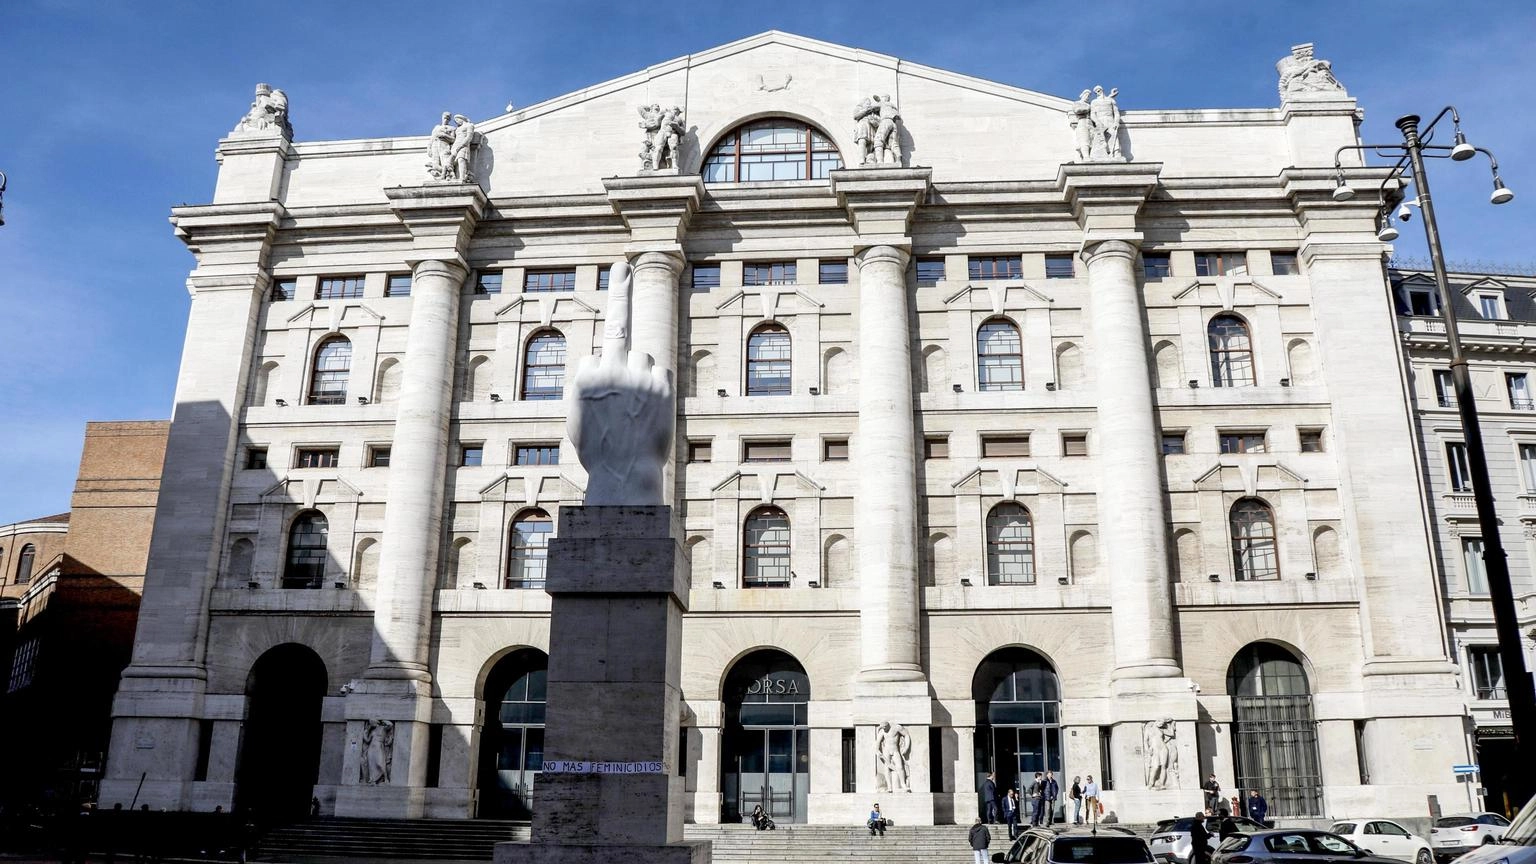 Borsa: Milano chiude in leggero rialzo, Ftse Mib +0,28%